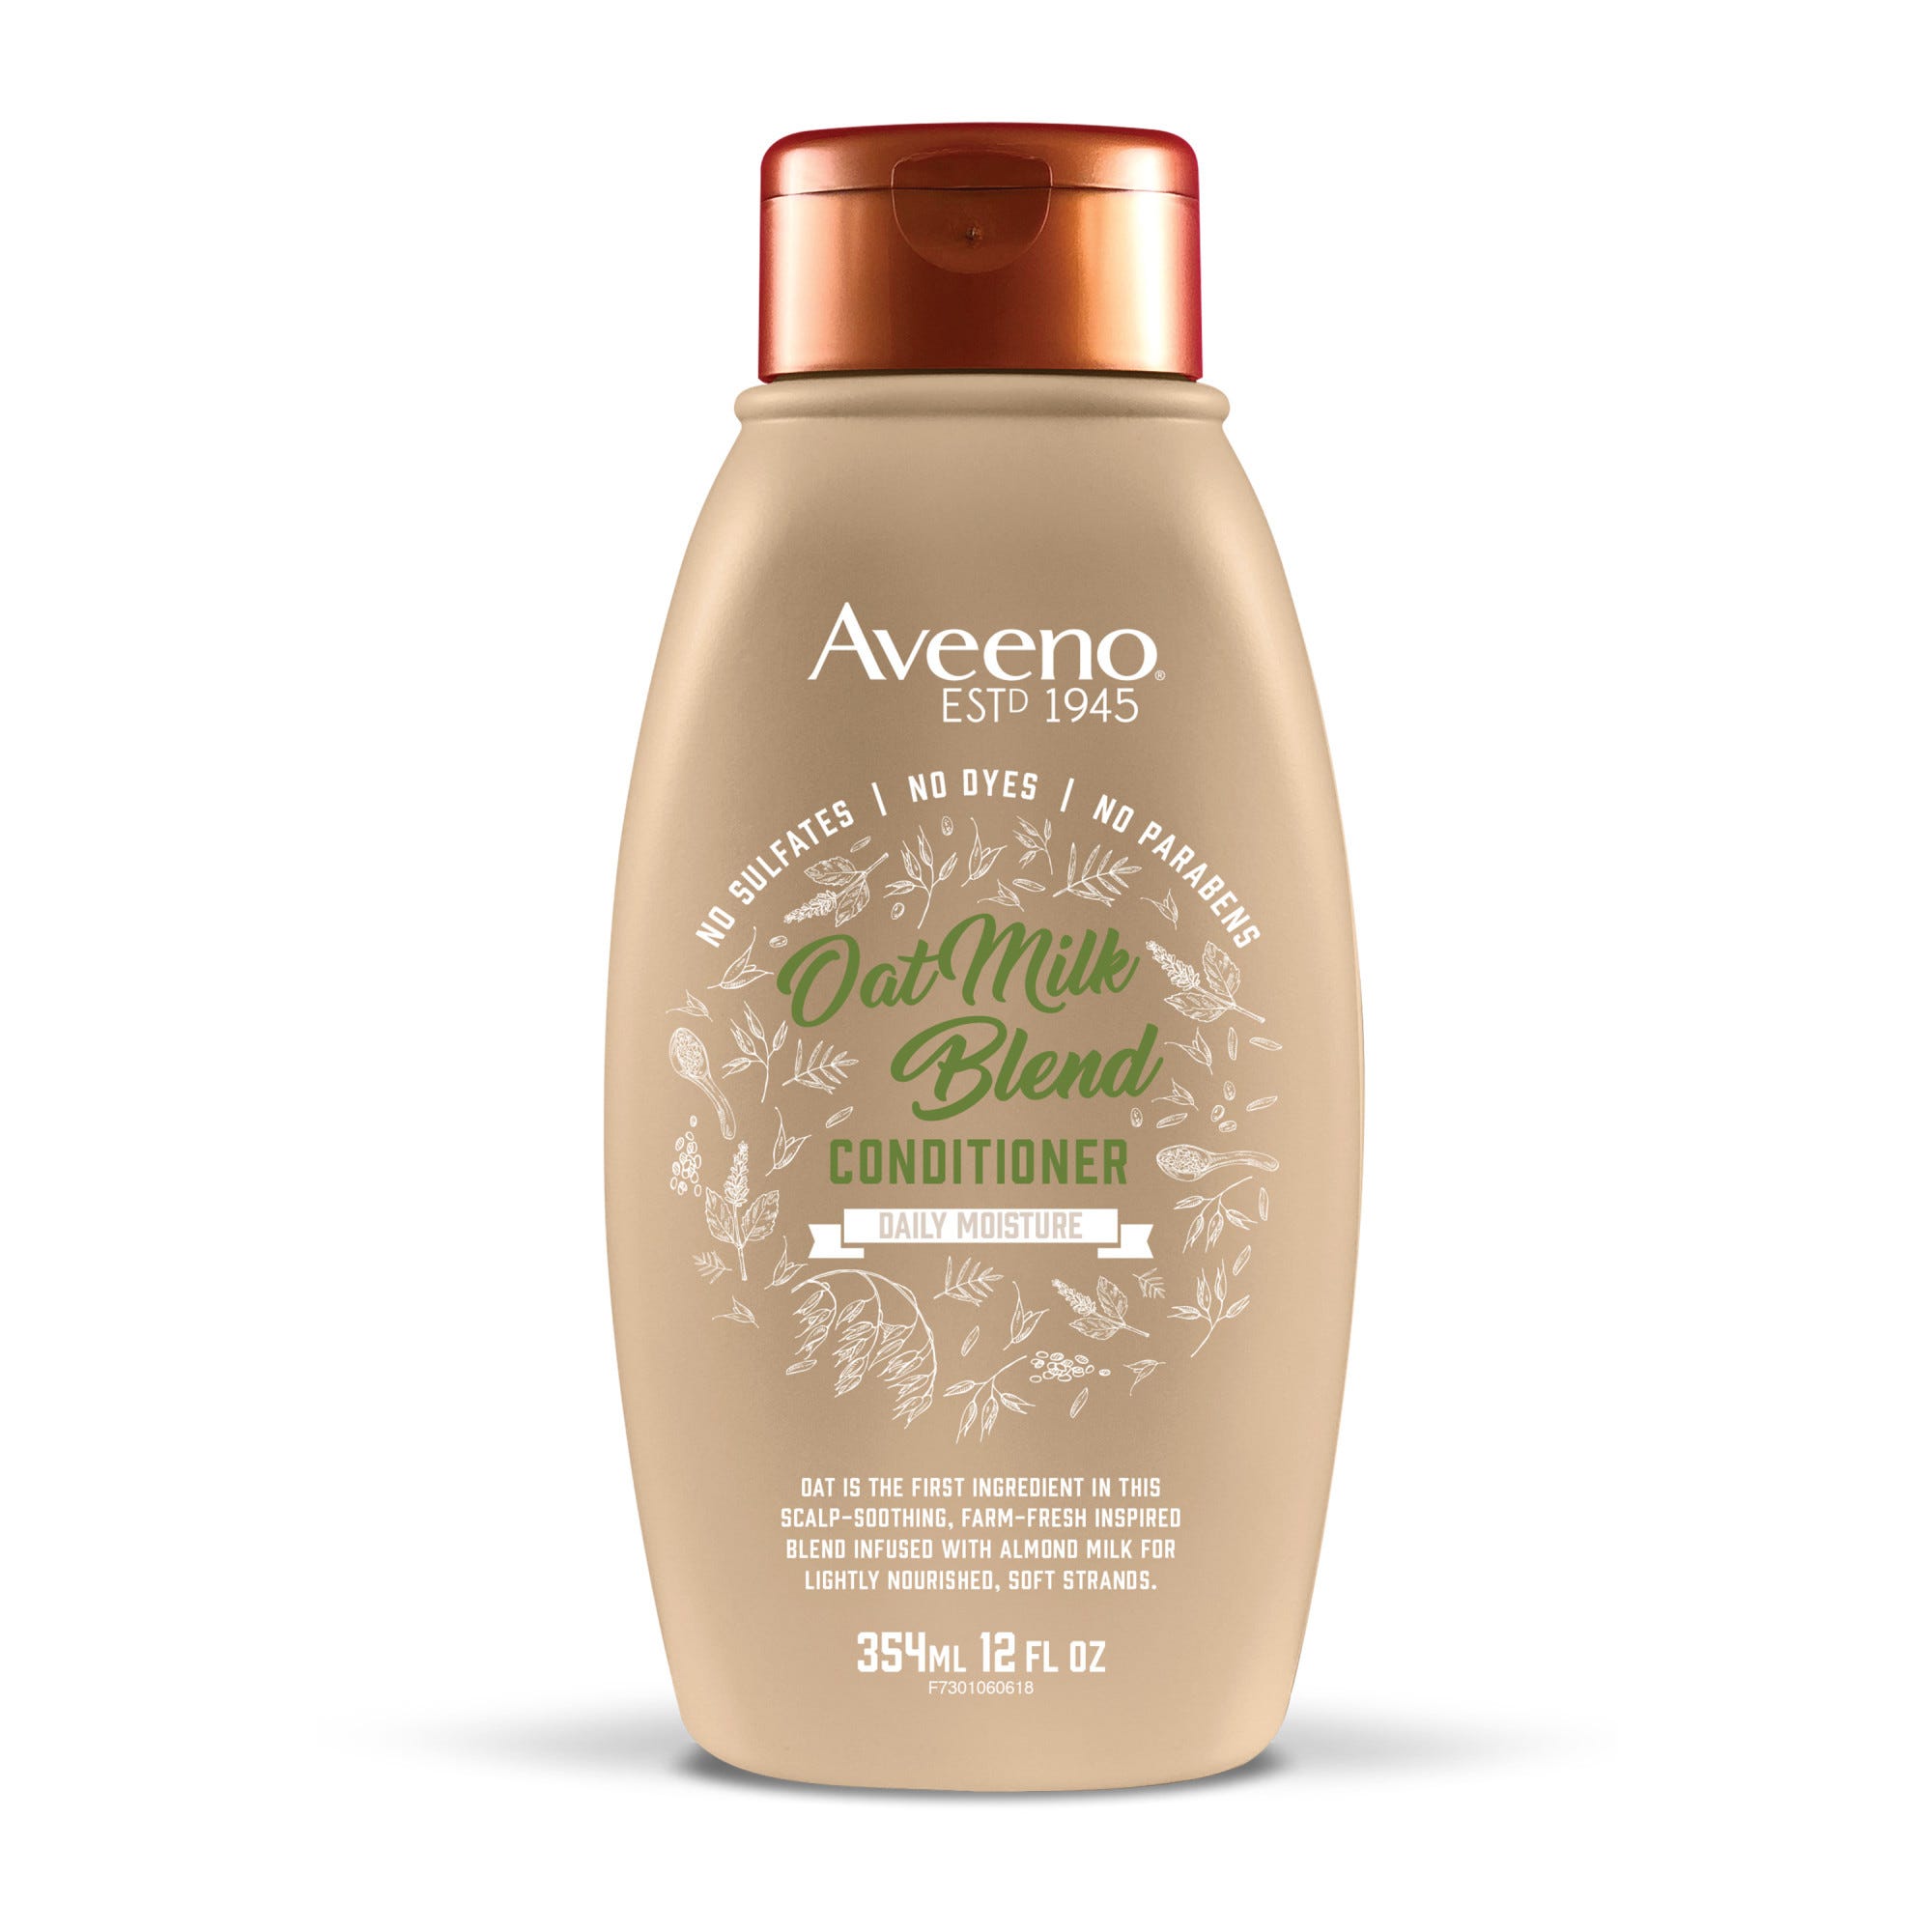 Aveeno Scalp Soothing Oat Milk Blend Conditioner - 12 fl. oz